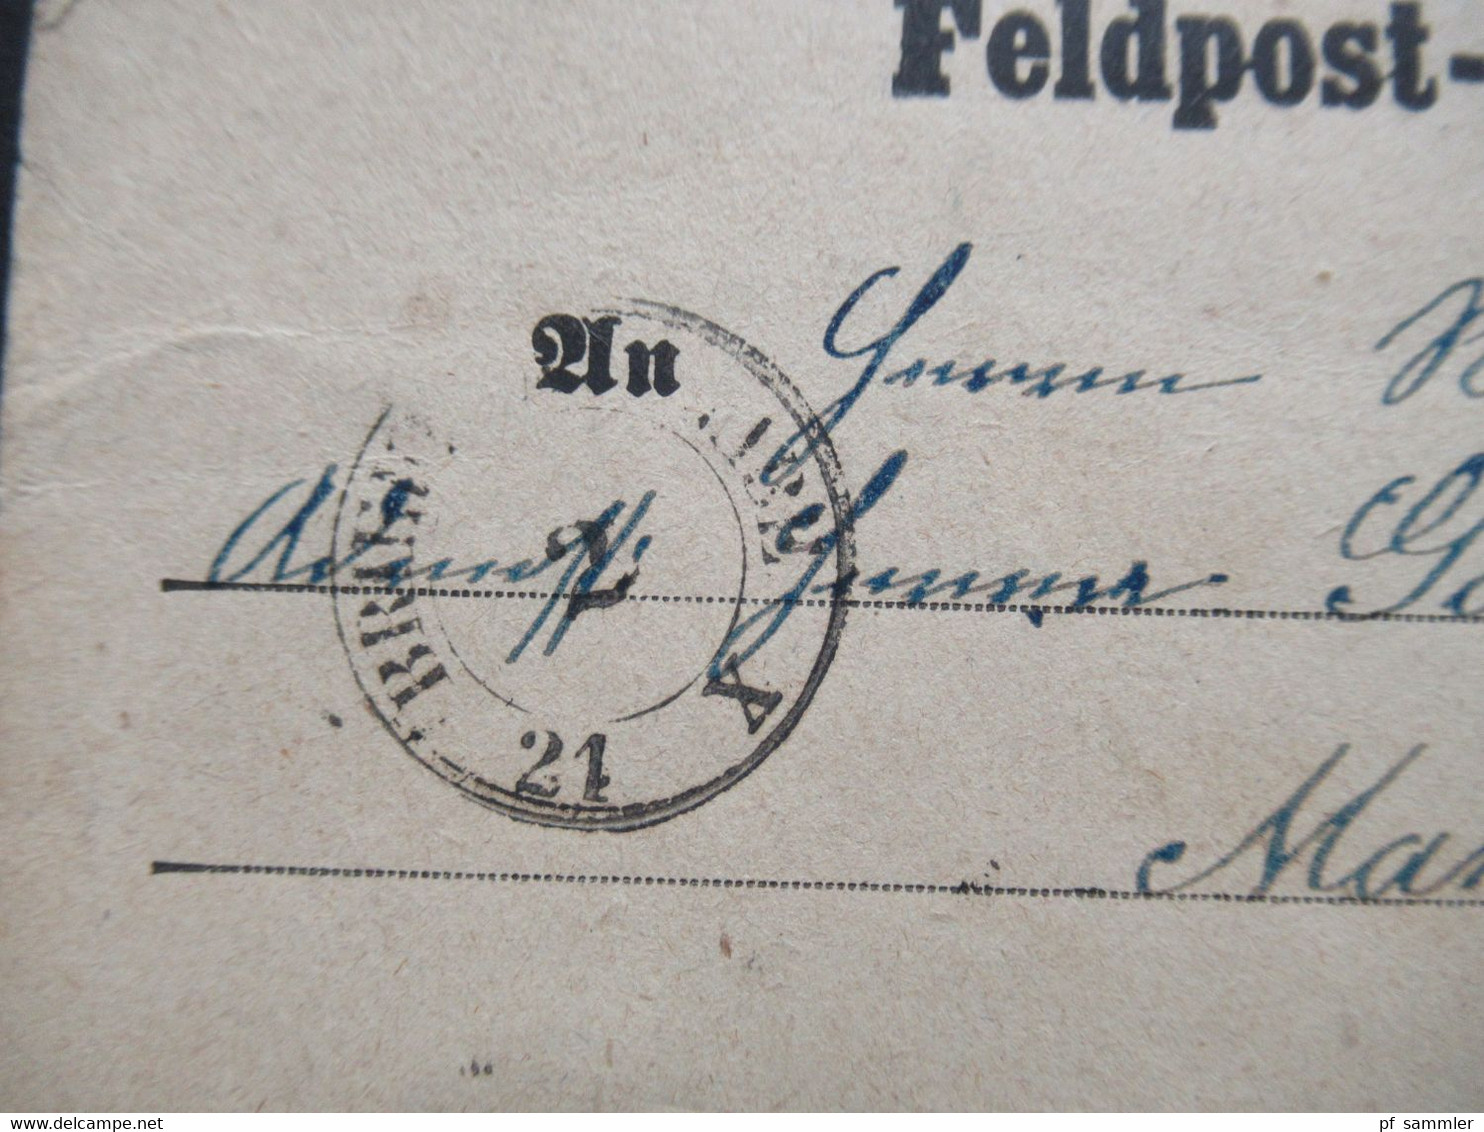 Feldpost Deutsch Französischer Krieg 16.10.1870 Stempel Feld - Post Exped. 24. Inf. Div. Siege De Paris / Montfermeil - Krieg 1870